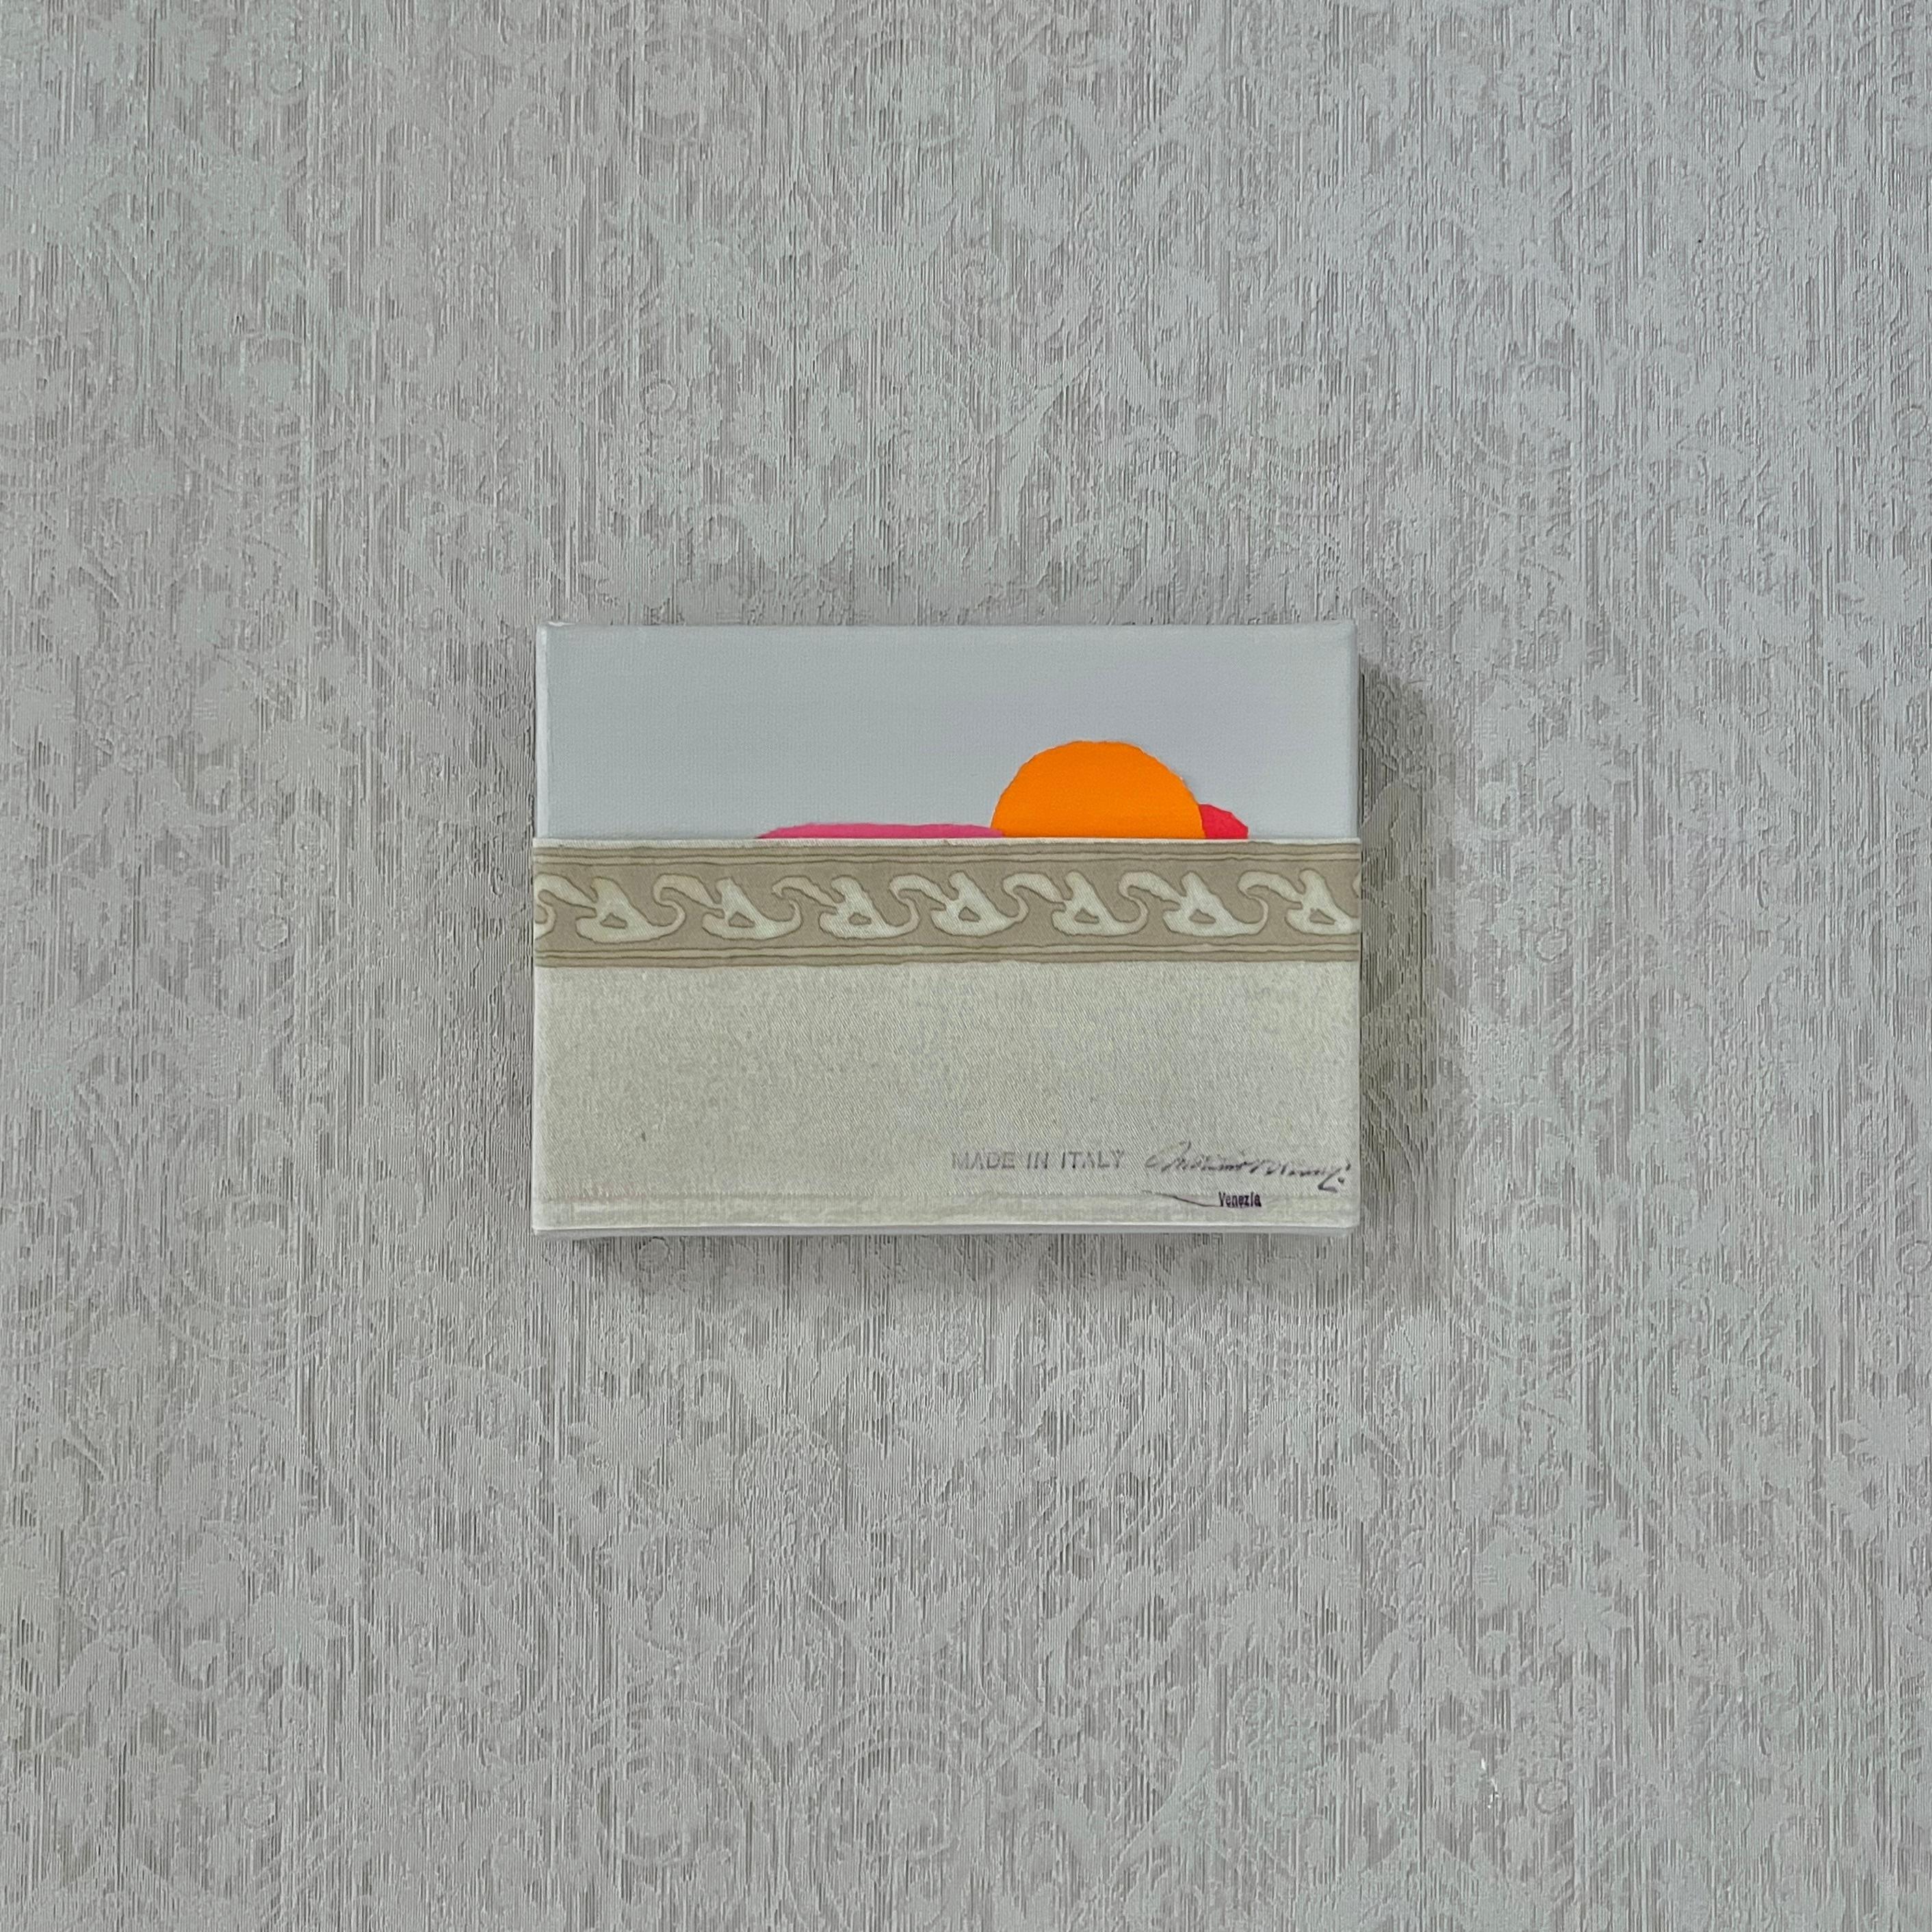 Andrea Stajan-Ferkul Landscape Painting – Eine orangefarbene Sonne, 8"x6", Fragmente der Fortuny-Serie, Collage, Abstrakte Landschaft